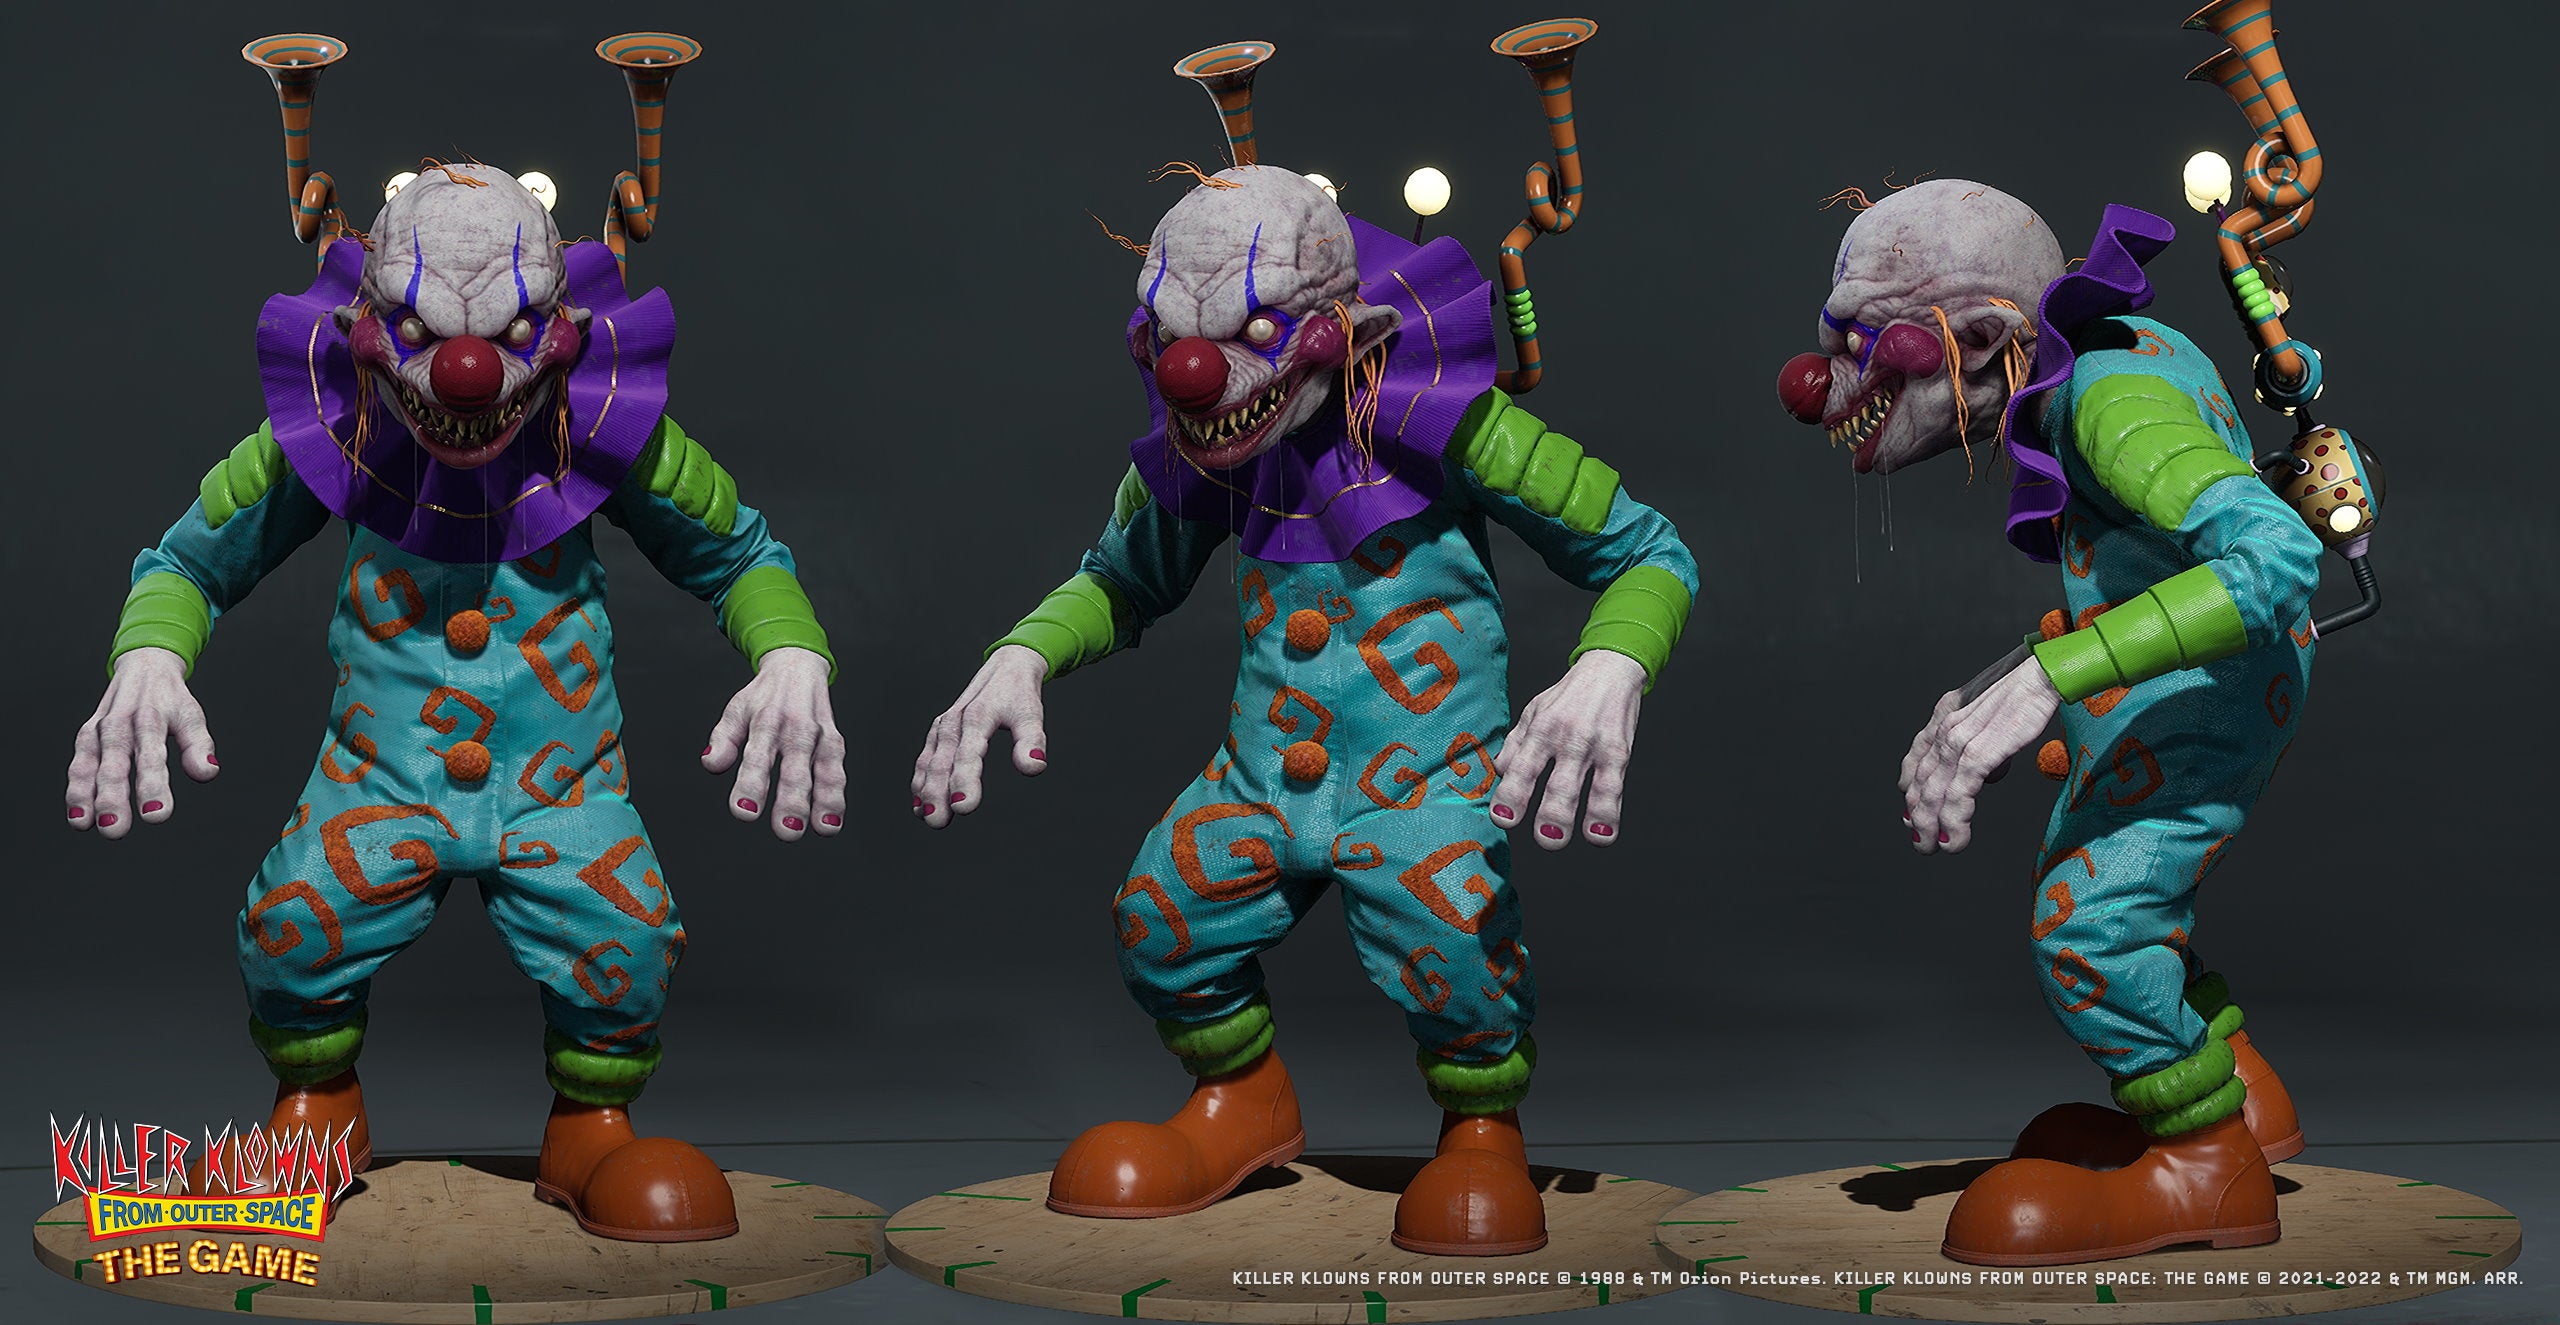 Killer klowns john massari. Killer Klowns from Outer Space. Killer Klowns from Outer Space the game.